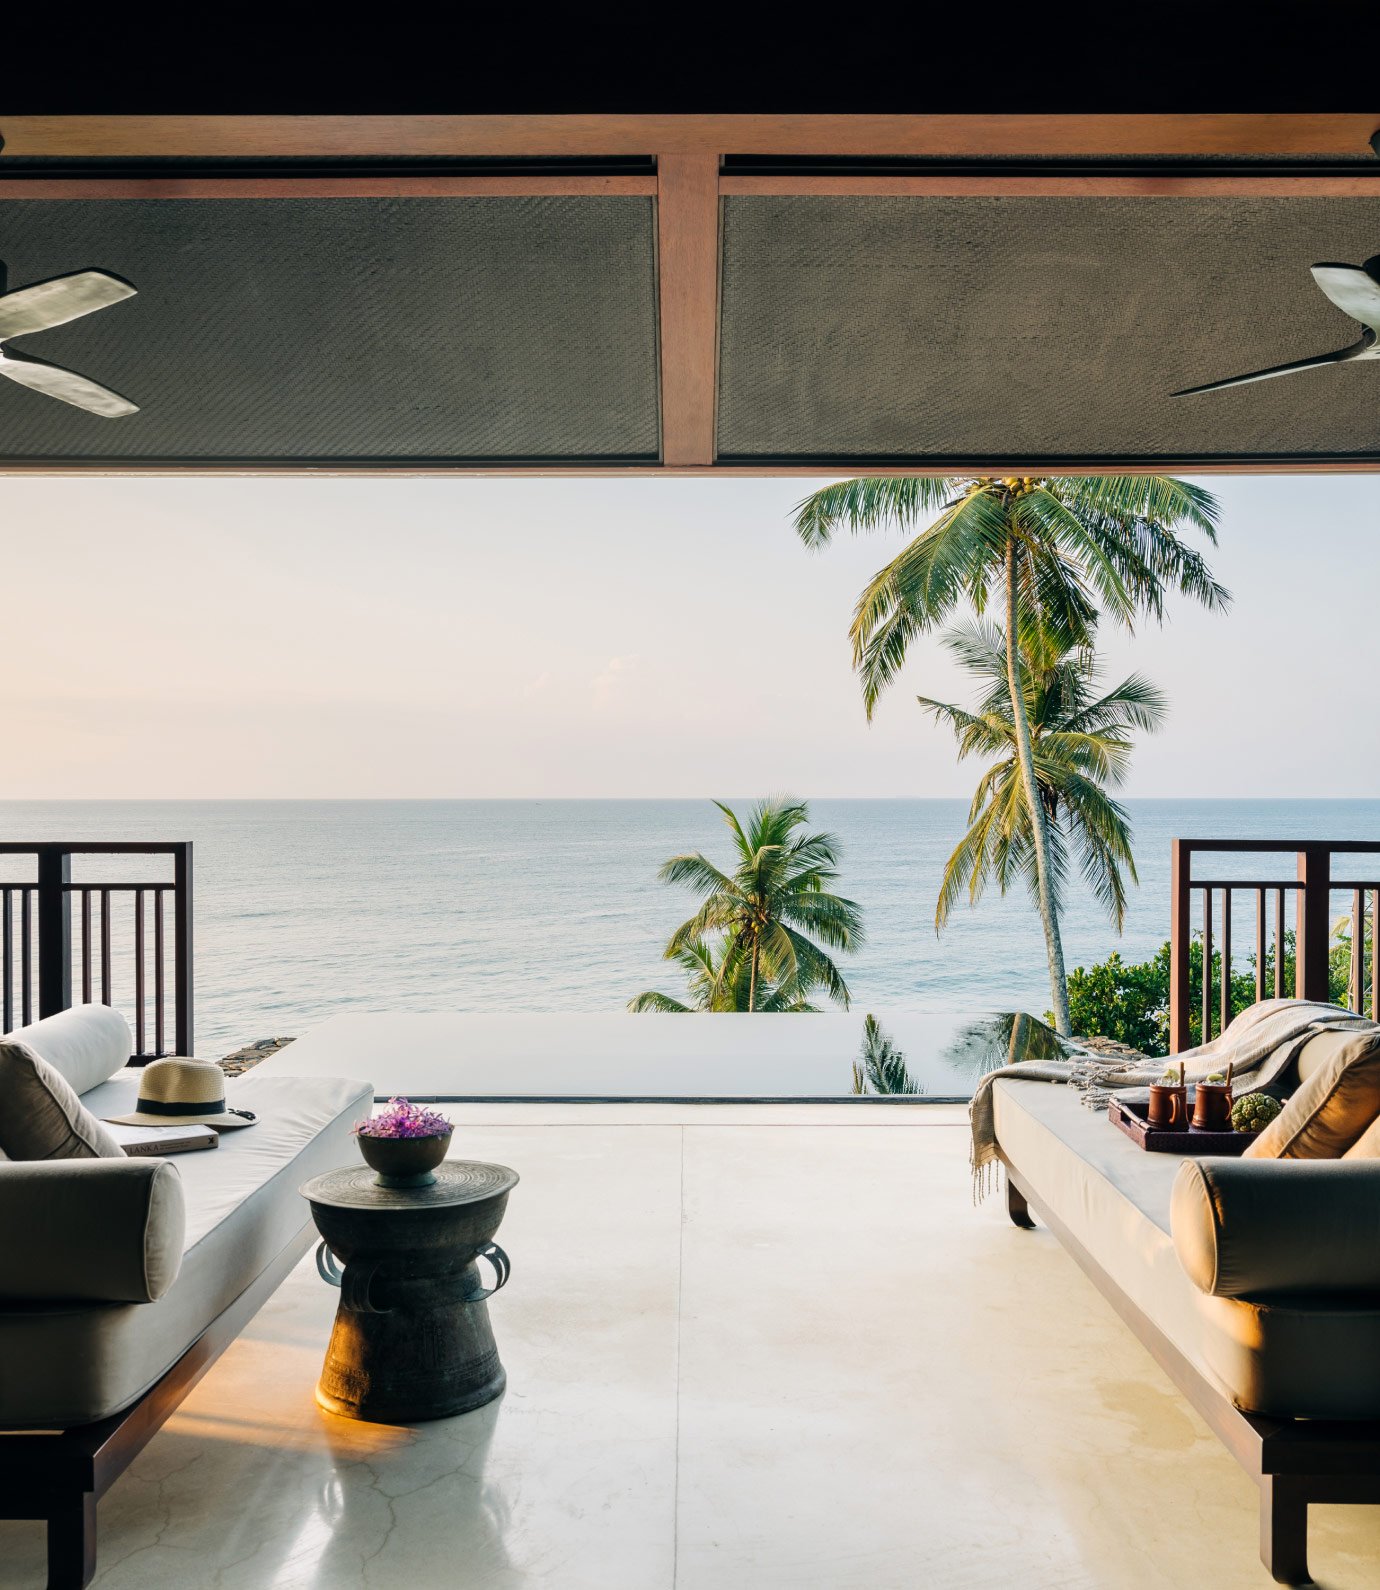 Ani-Sri-Lanka_Accommodation_Classic-Suite_terrace